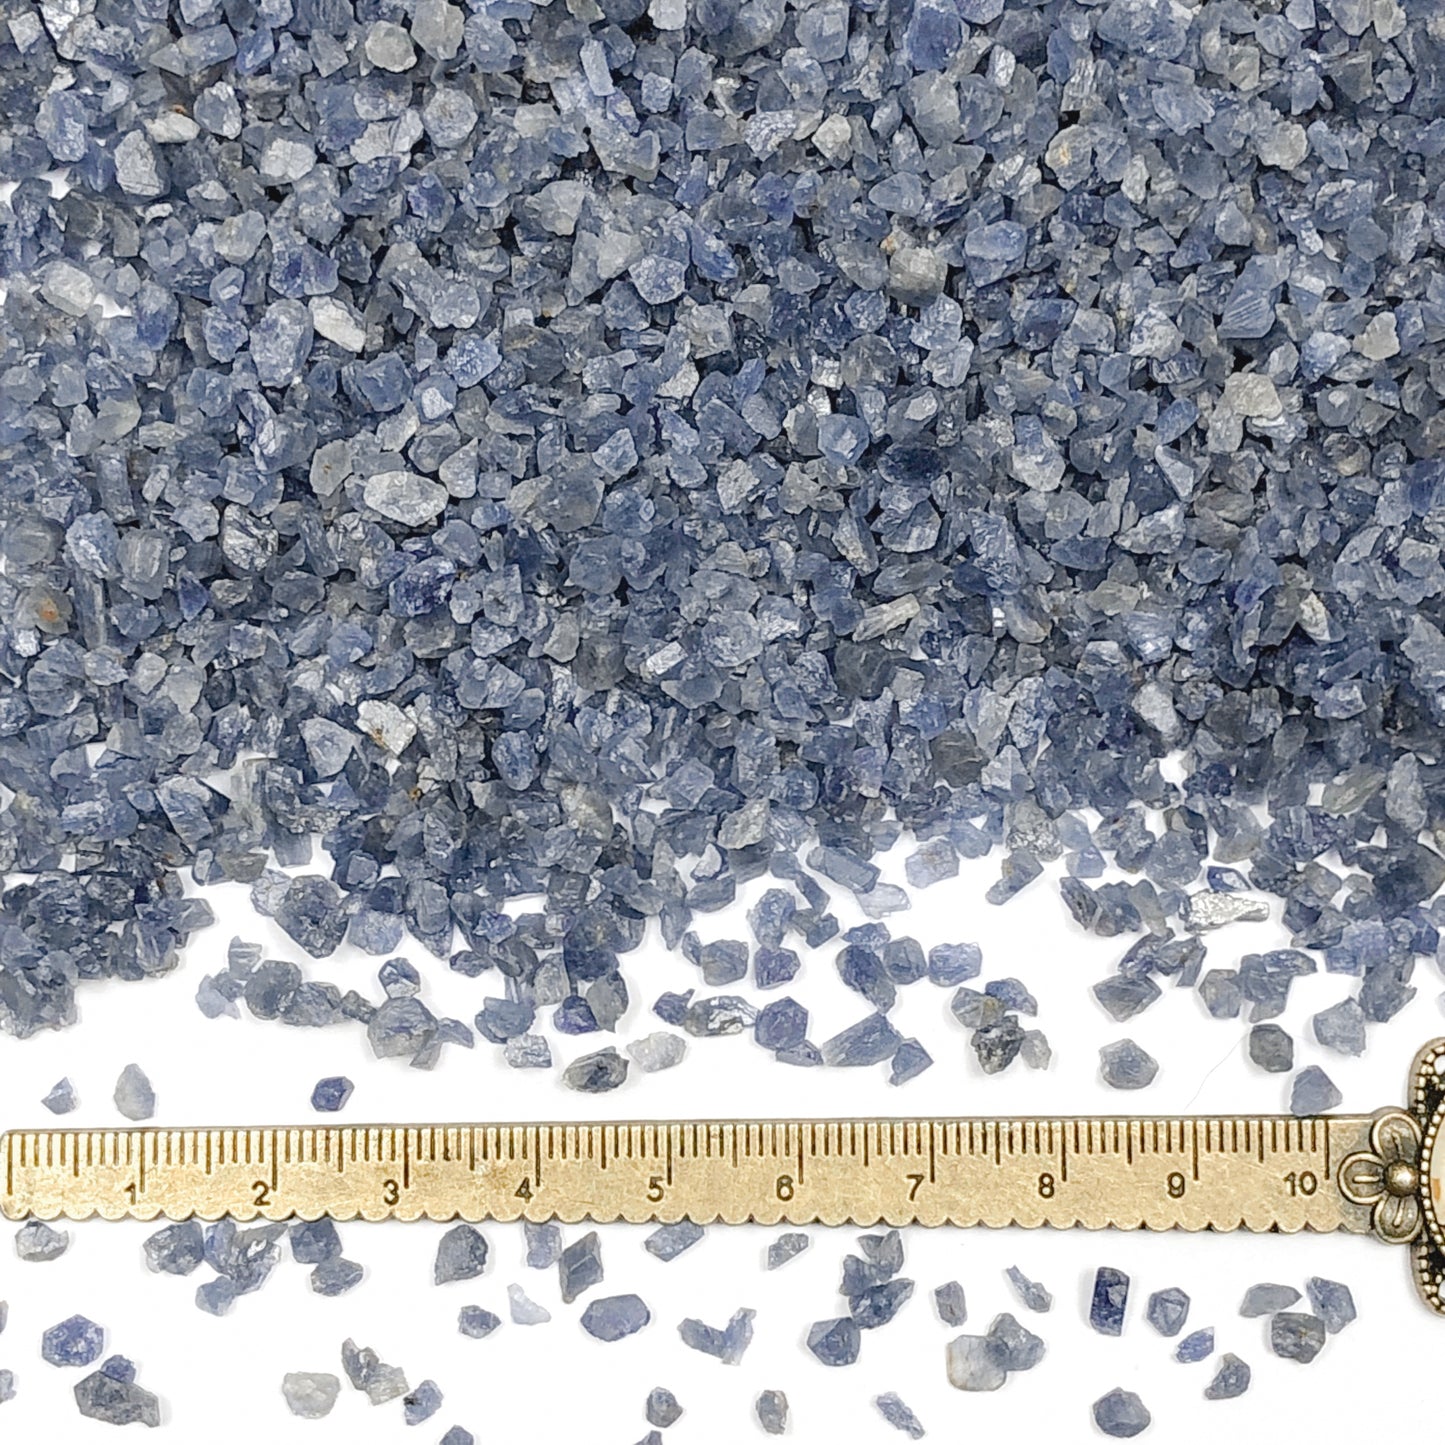 Crushed Blue Sapphire (Corundum) from Sri Lanka, Coarse Crush, Gravel Size, 4mm - 2mm